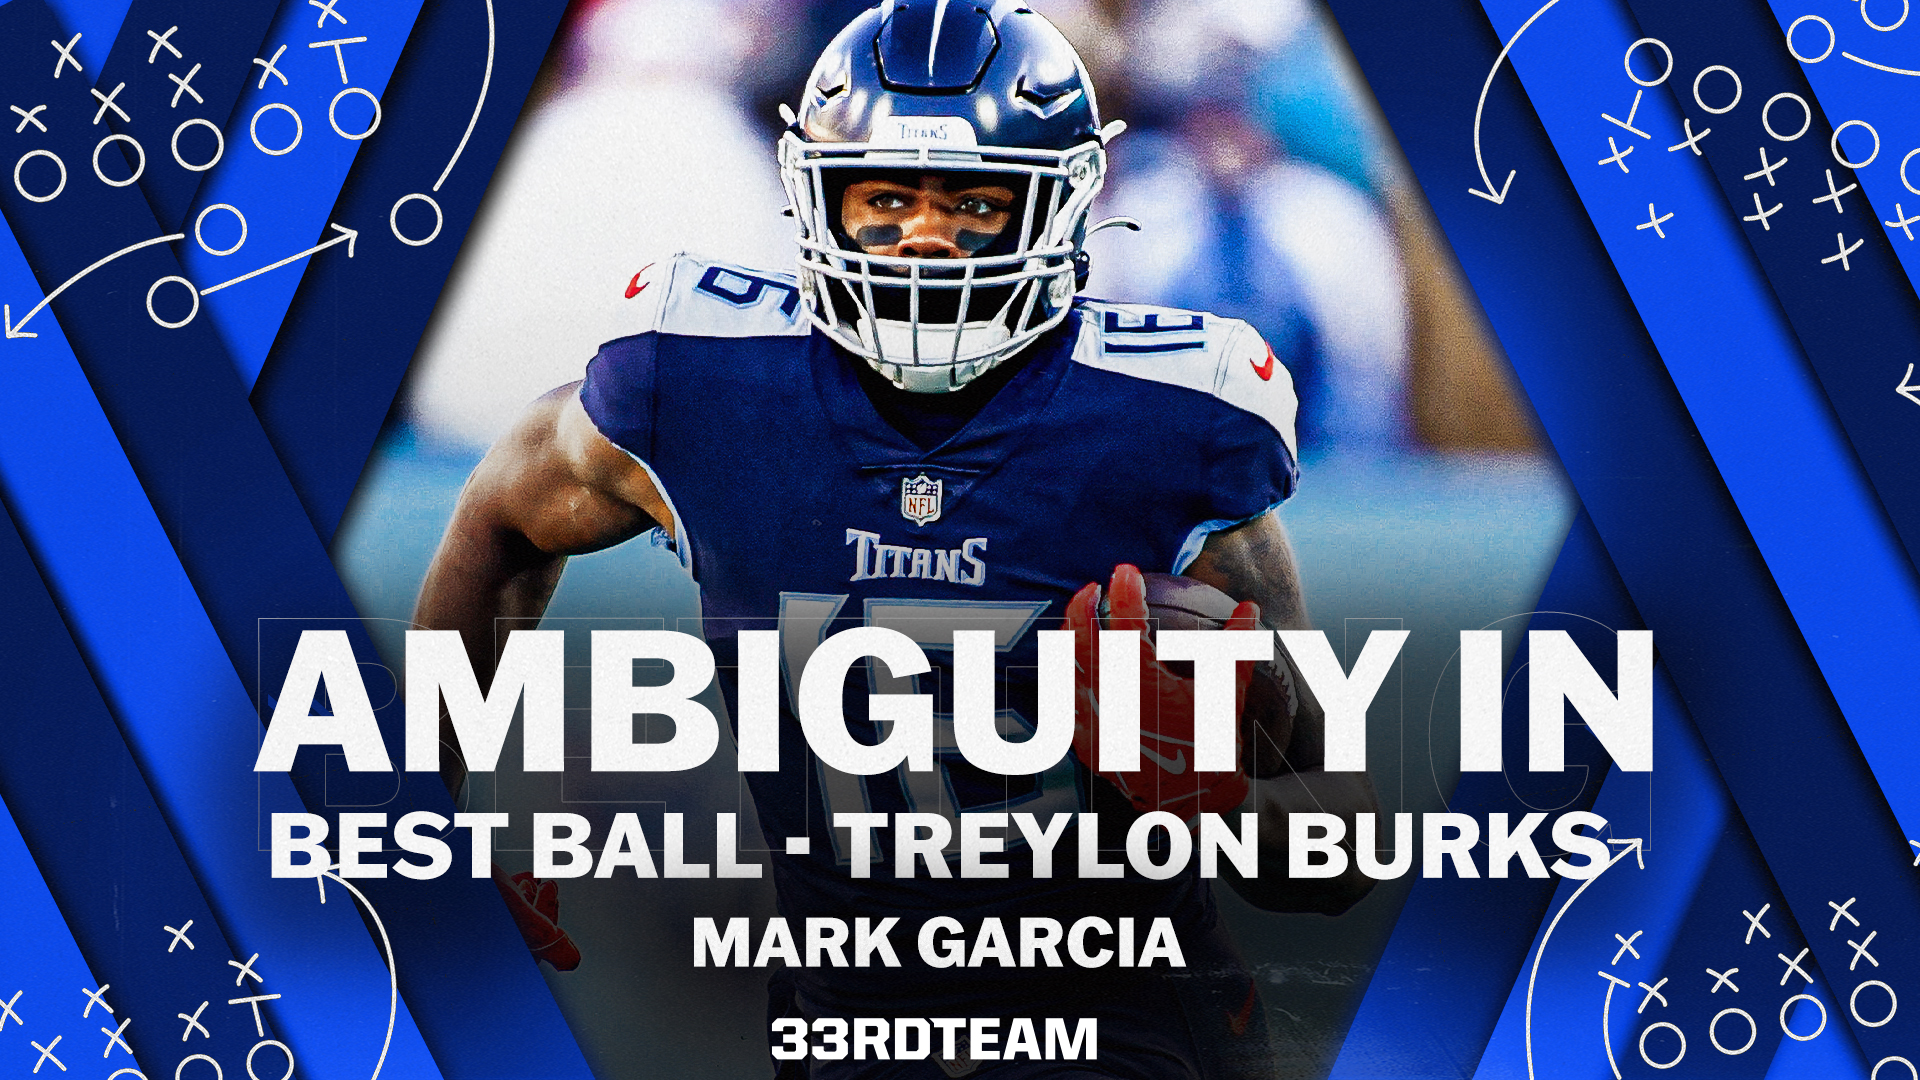 Fantasy Football Best Ball: How Much Value Does Treylon Burks Hold?